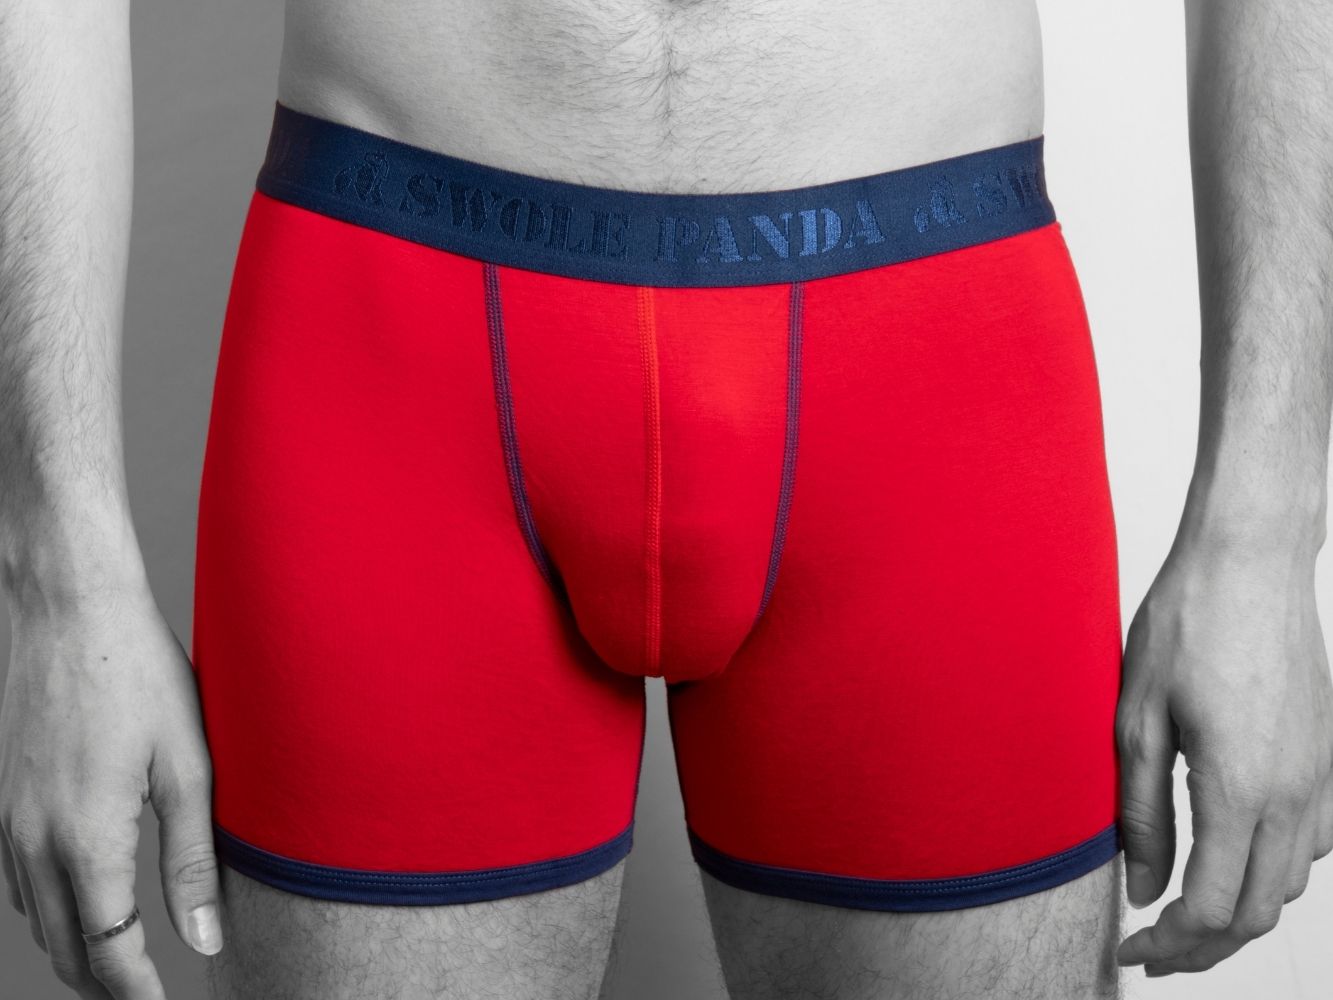 underwear-bamboo-boxers-red-blue-band-1_b3706ffc-eb57-4eee-8693-24e6e0137a4a.jpg